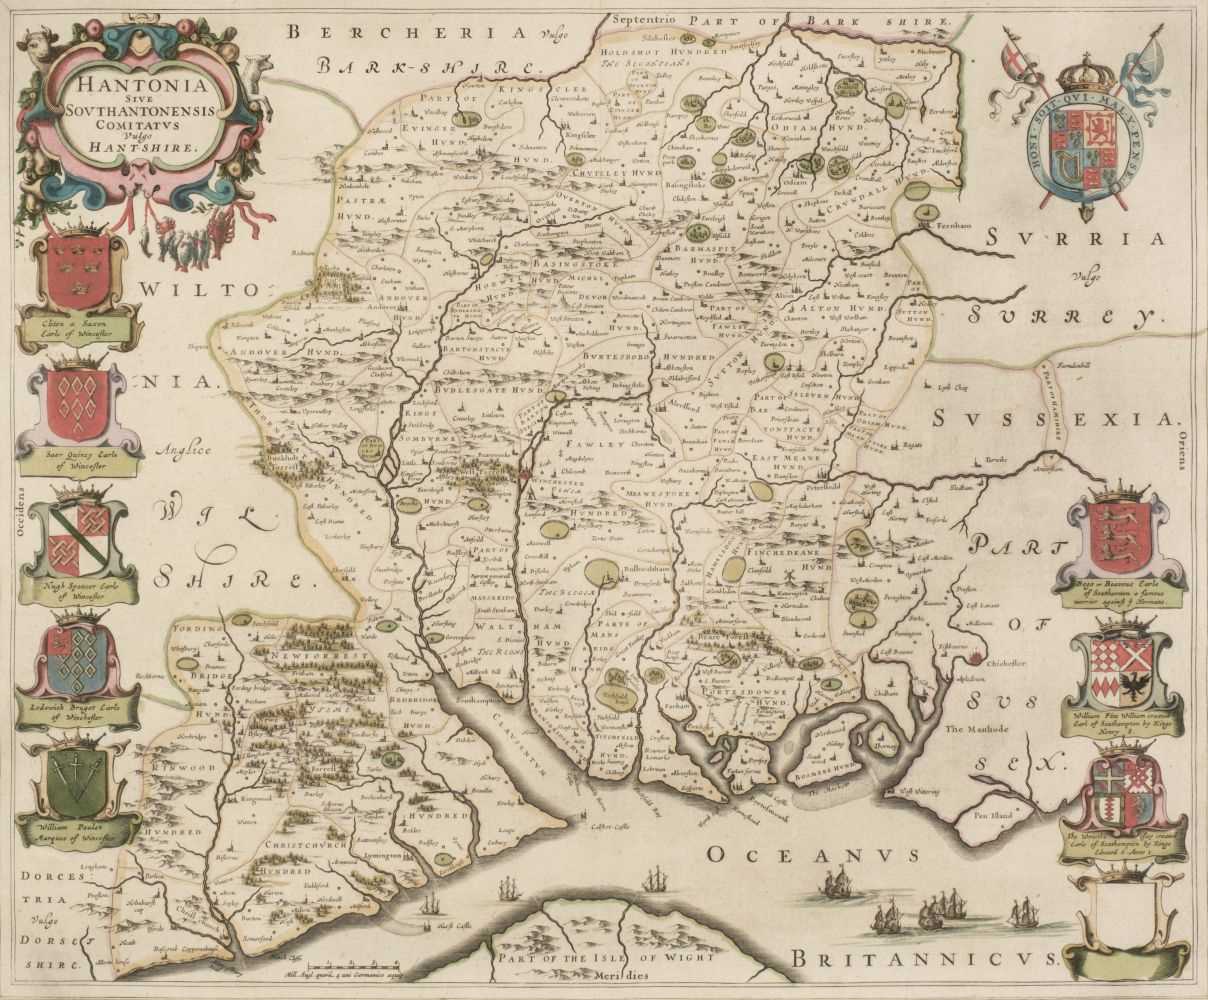 Lot 21 - Hampshire. Blaeu (J.), Hantonia sive Southantonensis comitatus vulgo Hant-shire, circa 1645